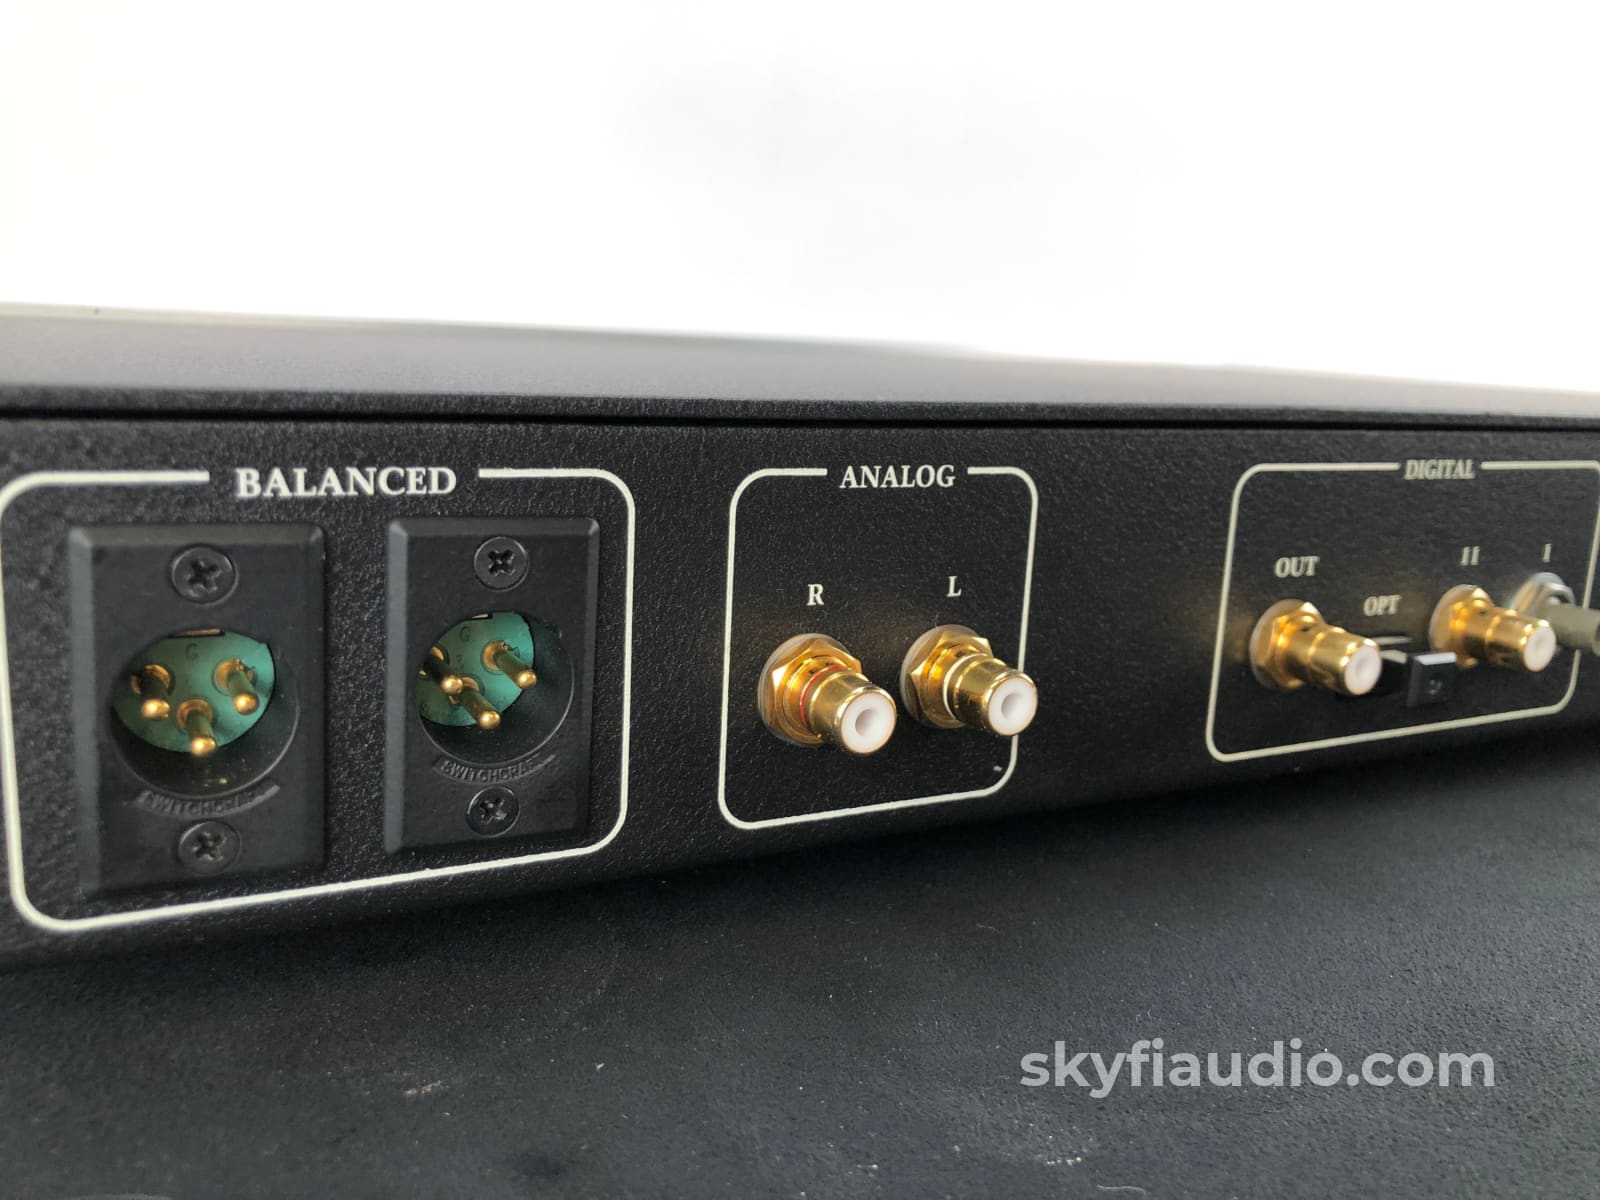 EAD (Enlightened Audio Designs) DSP-7000 Series III DAC